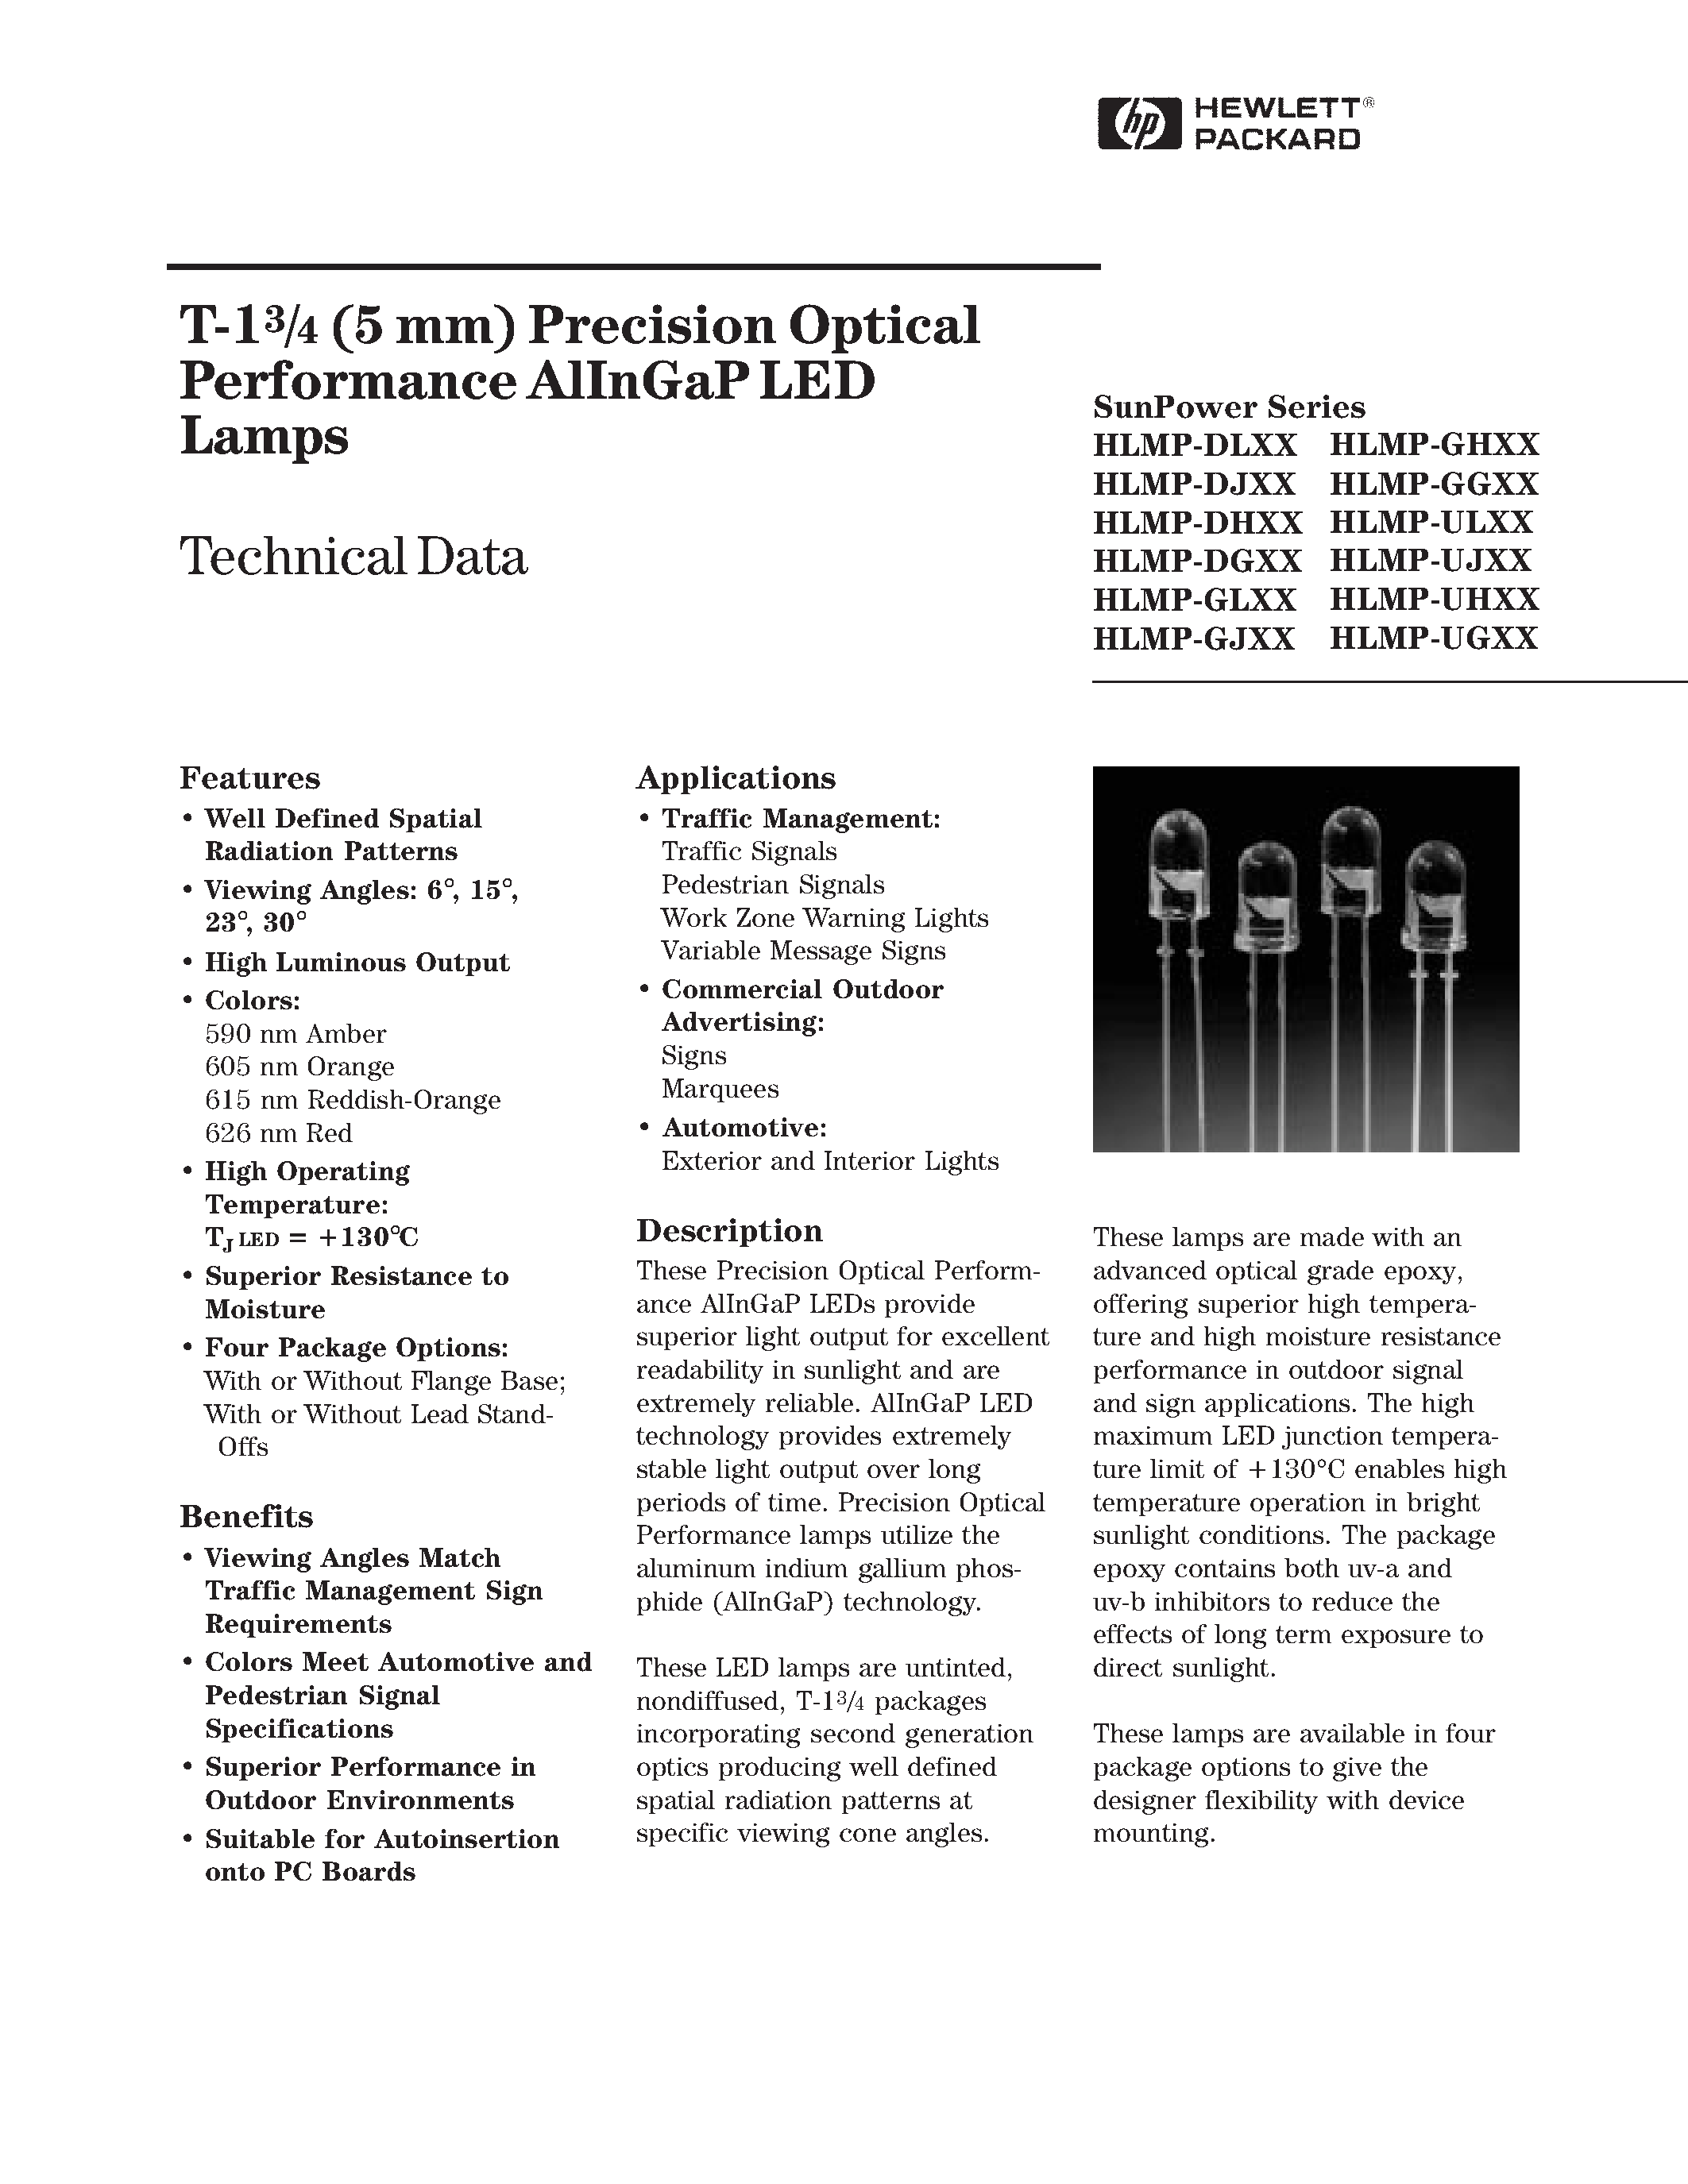 Datasheet HLMP-ULXX - T-13/4 (5 mm) Precision Optical Performance AlInGaP LED Lamps page 1